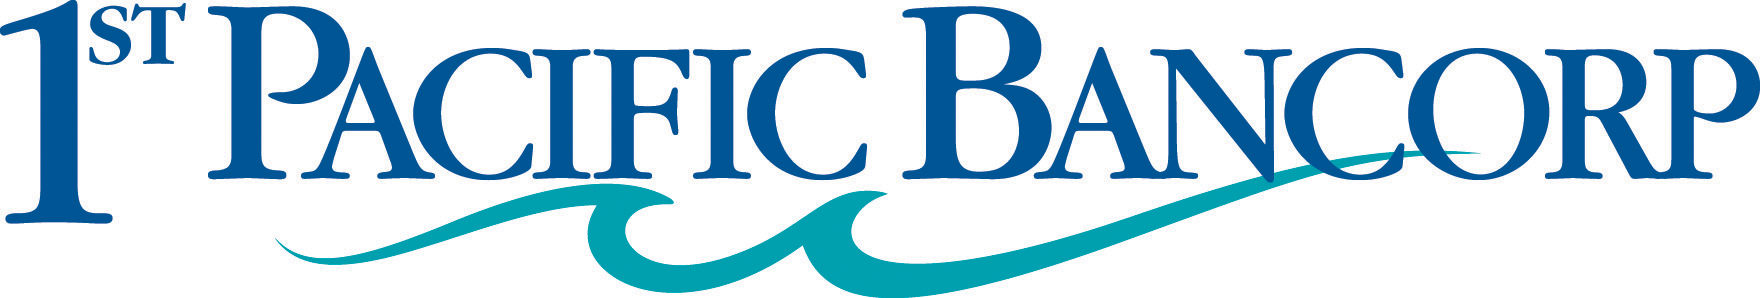 1st Pacific Bancorp Logo